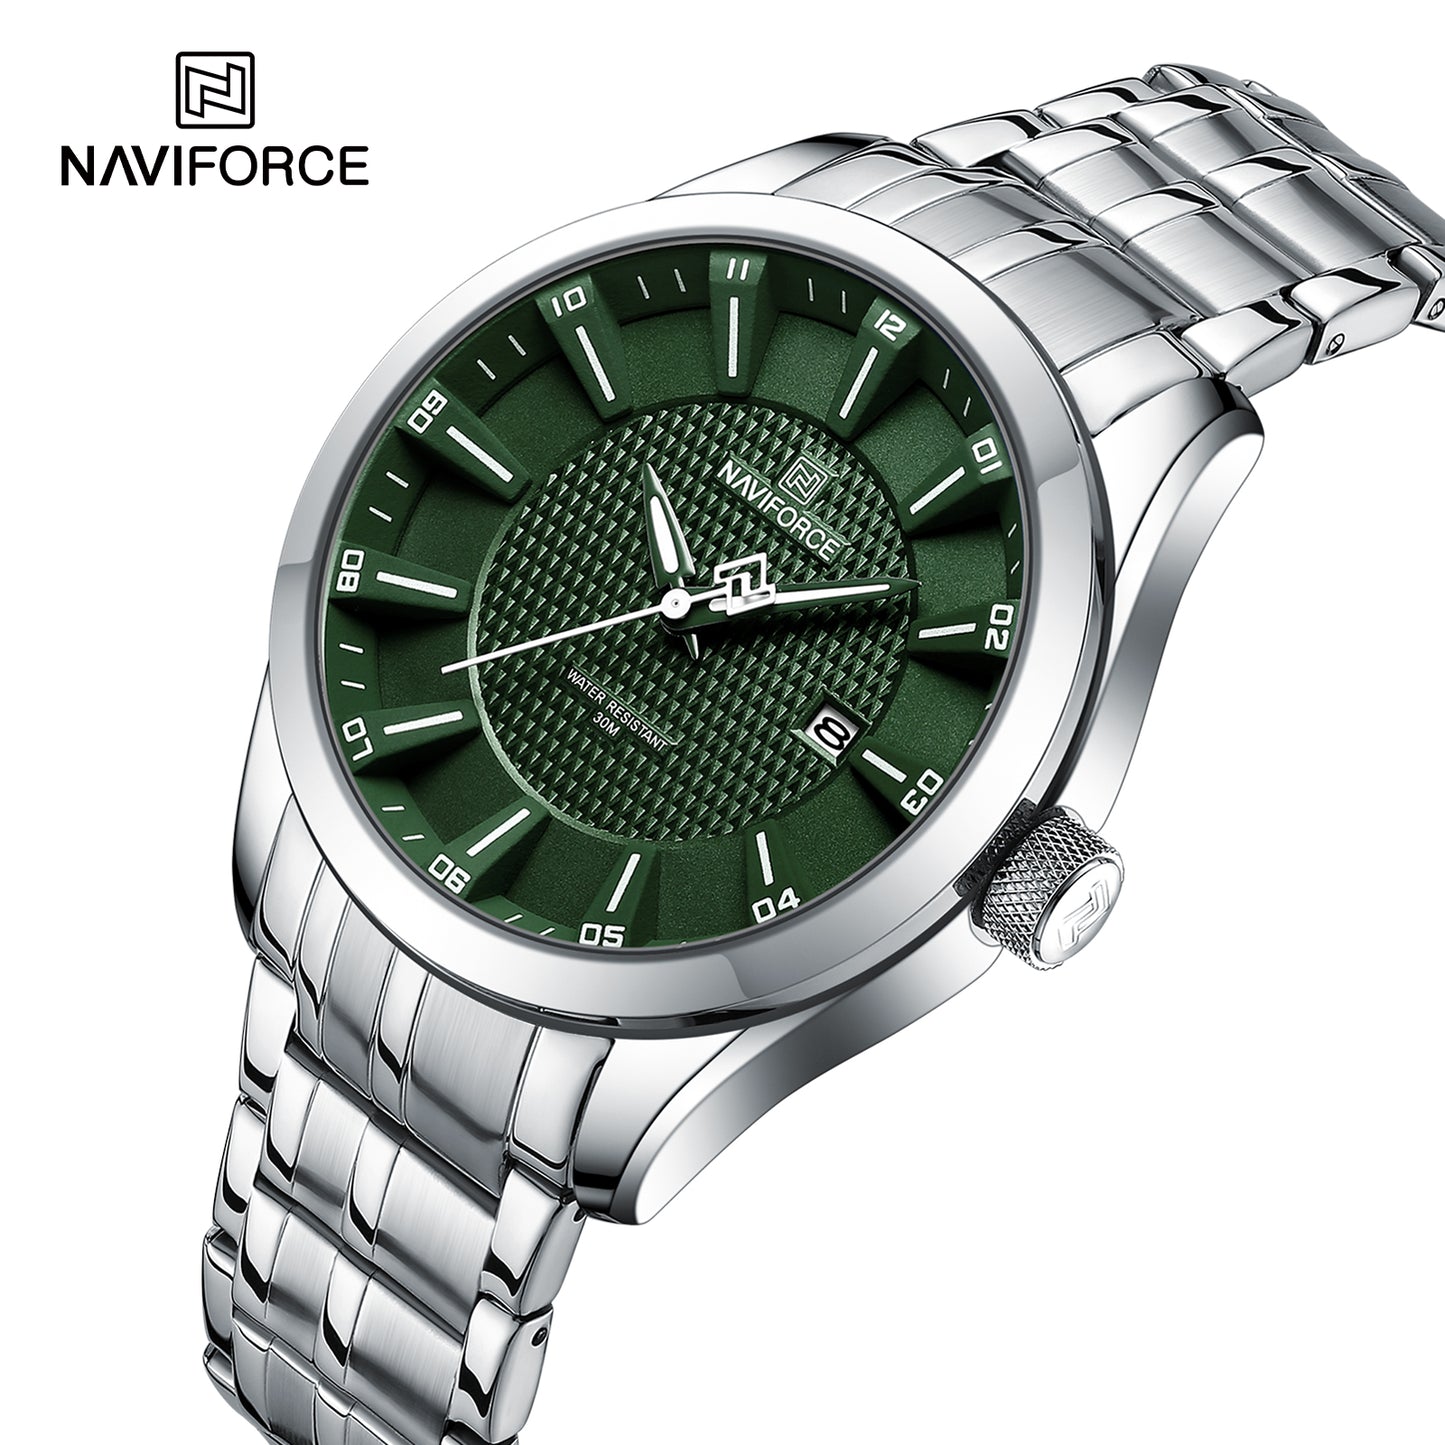 Naviforce 8032 Nebula Men Watch - Silver Green